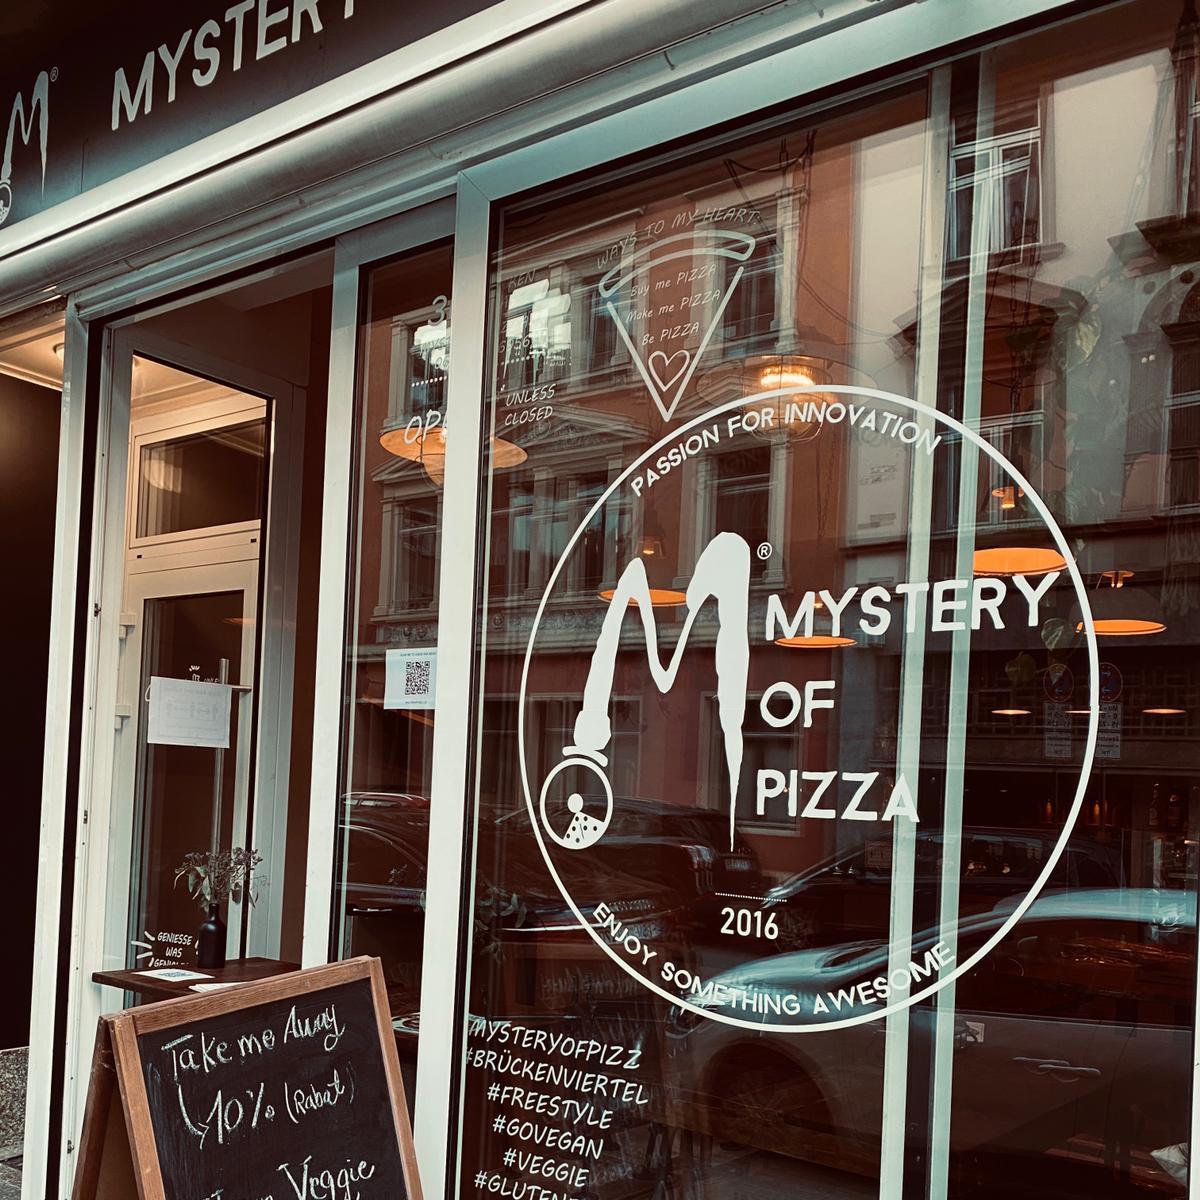 Restaurant "Mystery of Pizza - Frankfurt am Main" in Frankfurt am Main